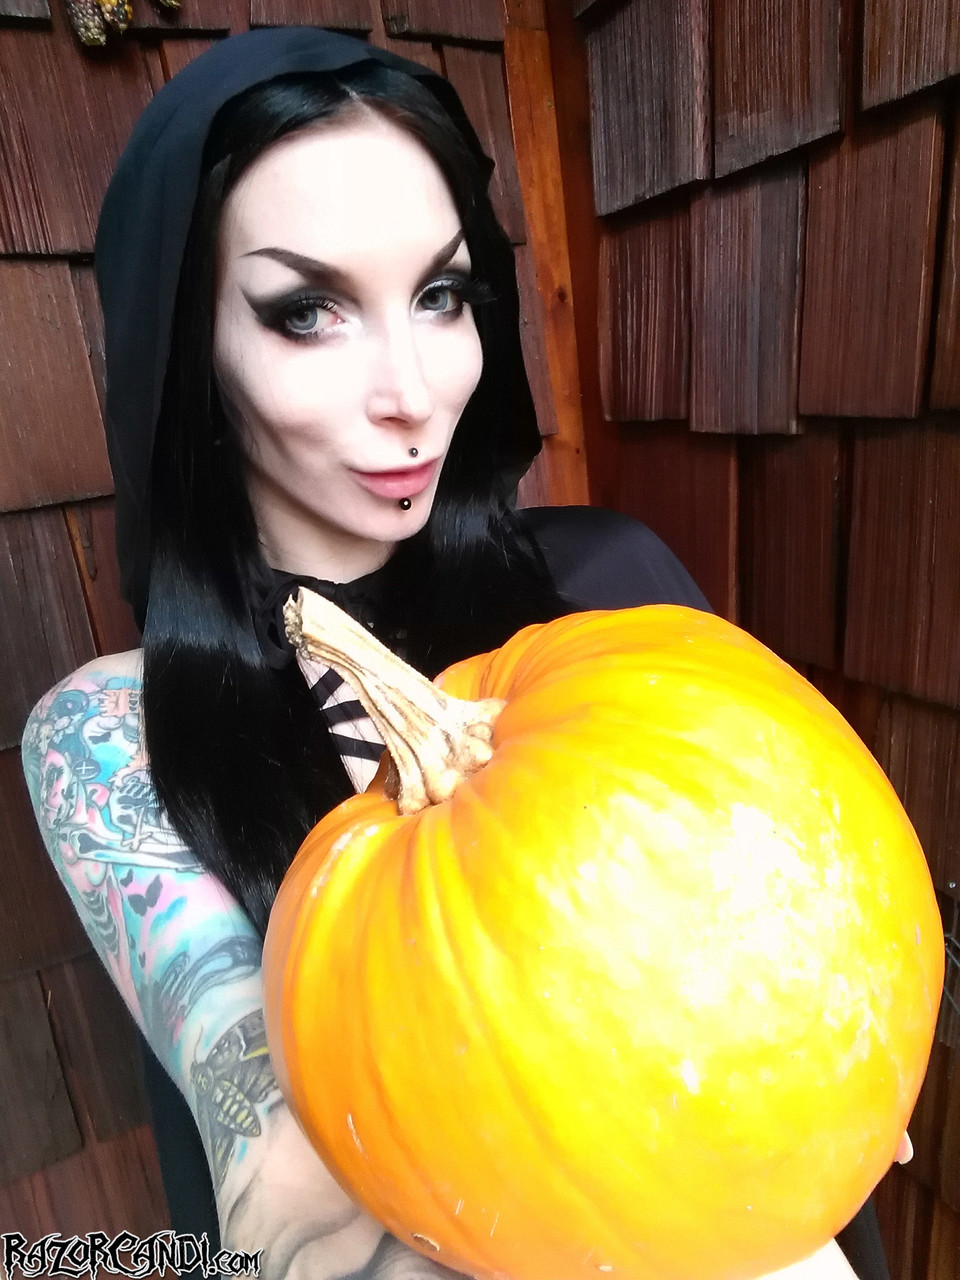 Goth girl Razor Candi flaunts her big ass over a pumpkin in Halloween attire porn photo #427655339